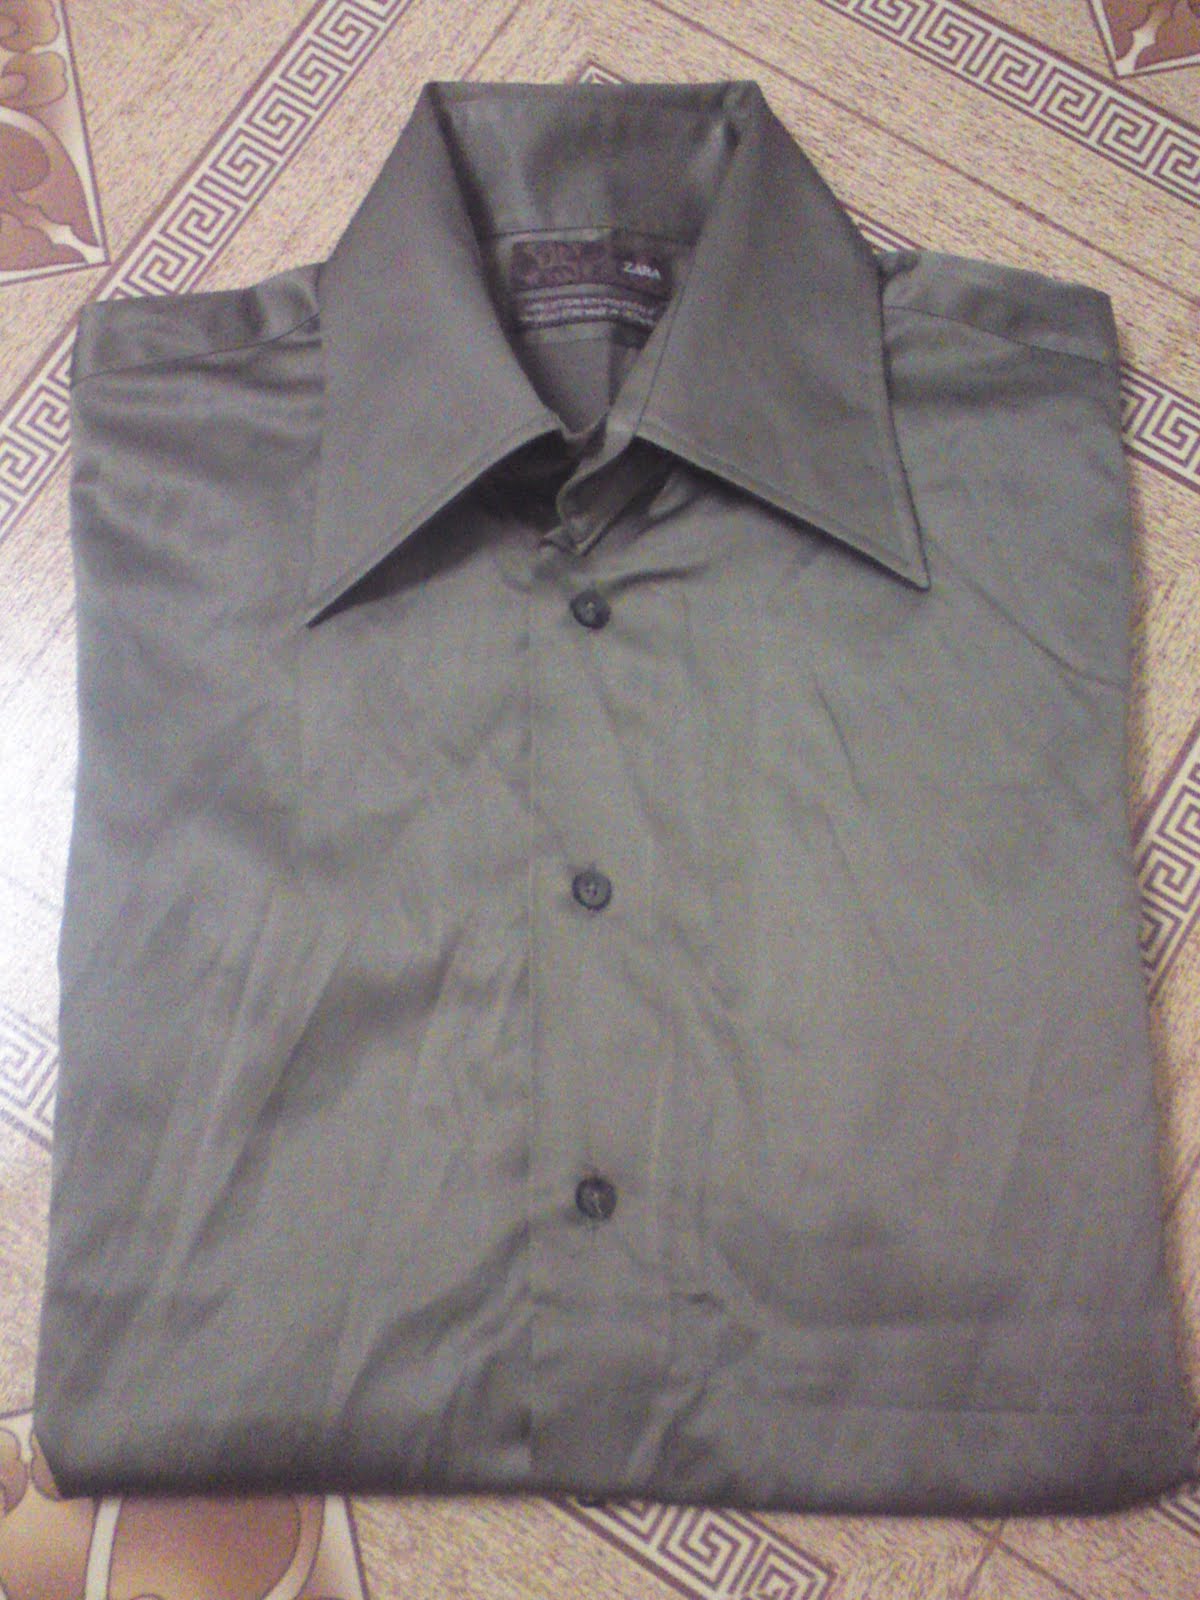 BEGINNER DIVER: zara casual shirts.(SOLD).